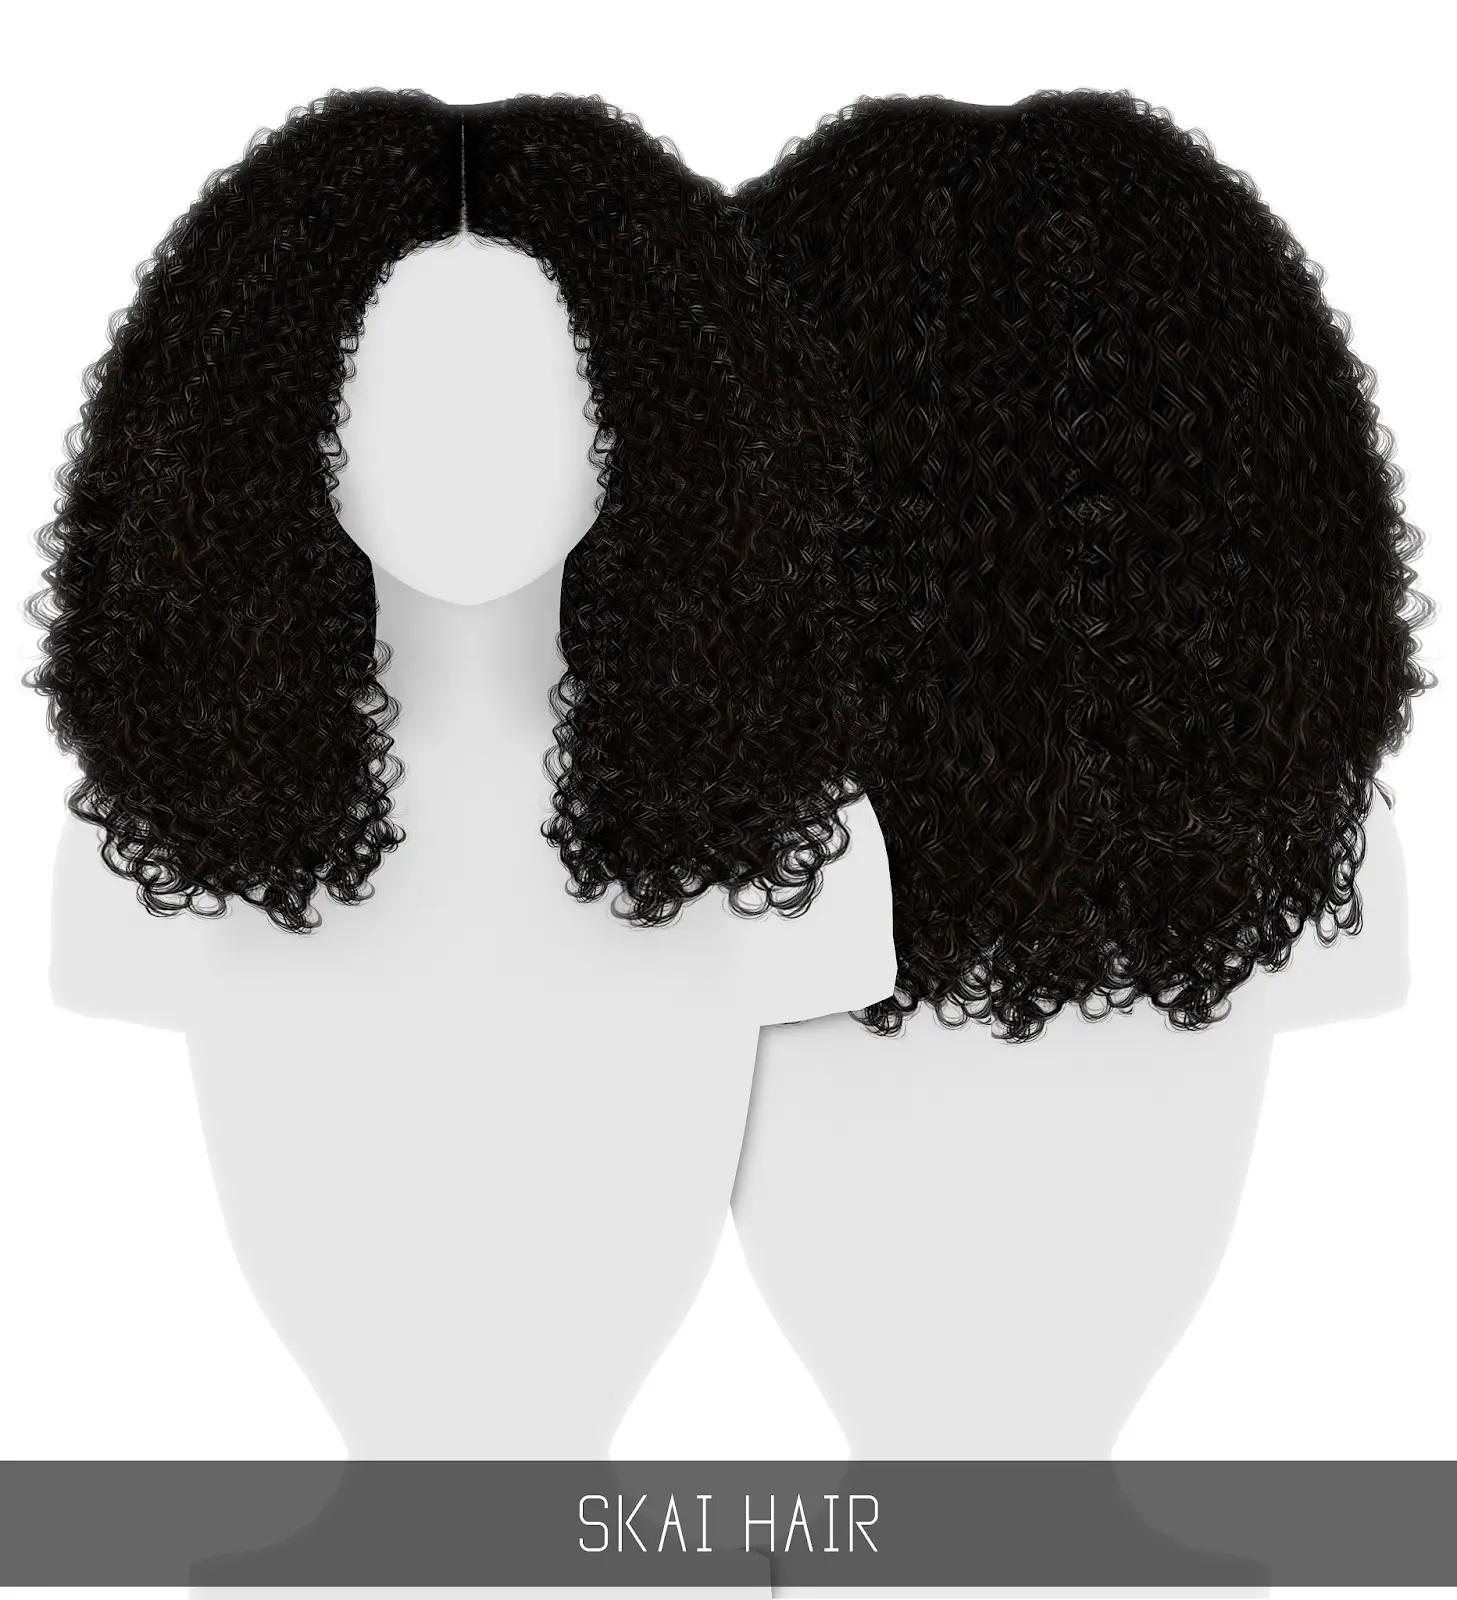 Sims 4 Hairs ~ Simpliciaty: Skai Hair
